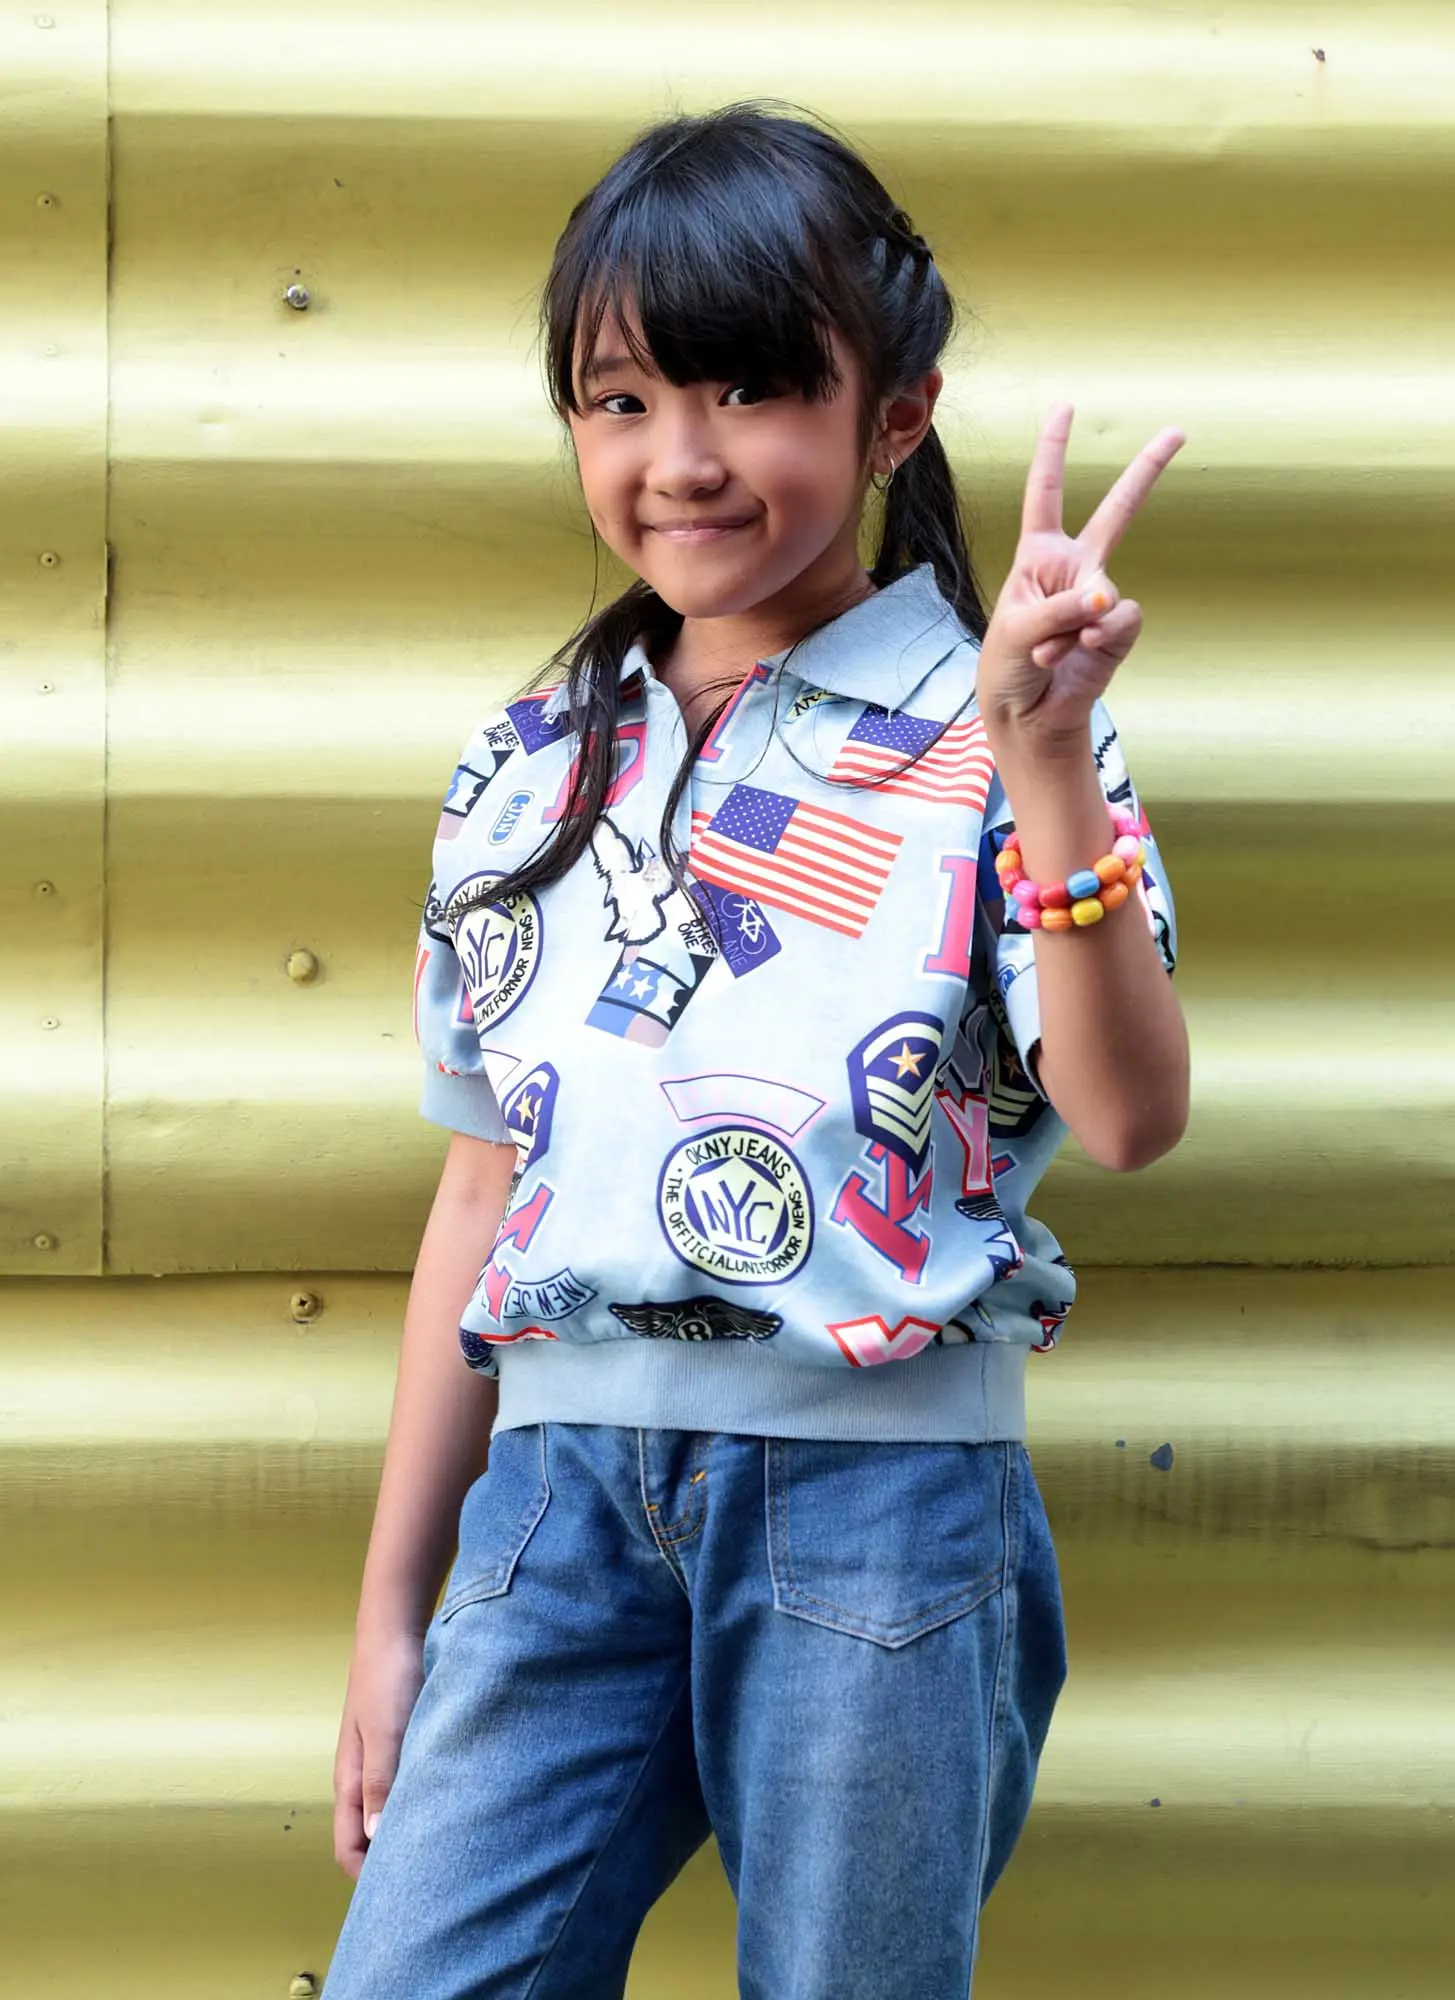 Cemen, komika yang selalu membangga-banggakan Cikarang ini juga menyampaikan kekagumannya terhadap salah satu peserta yang bernama Karin Putri Larasati yang saat ini masih berusia 10 tahun. (Deki Prayoga/Bintang.com)